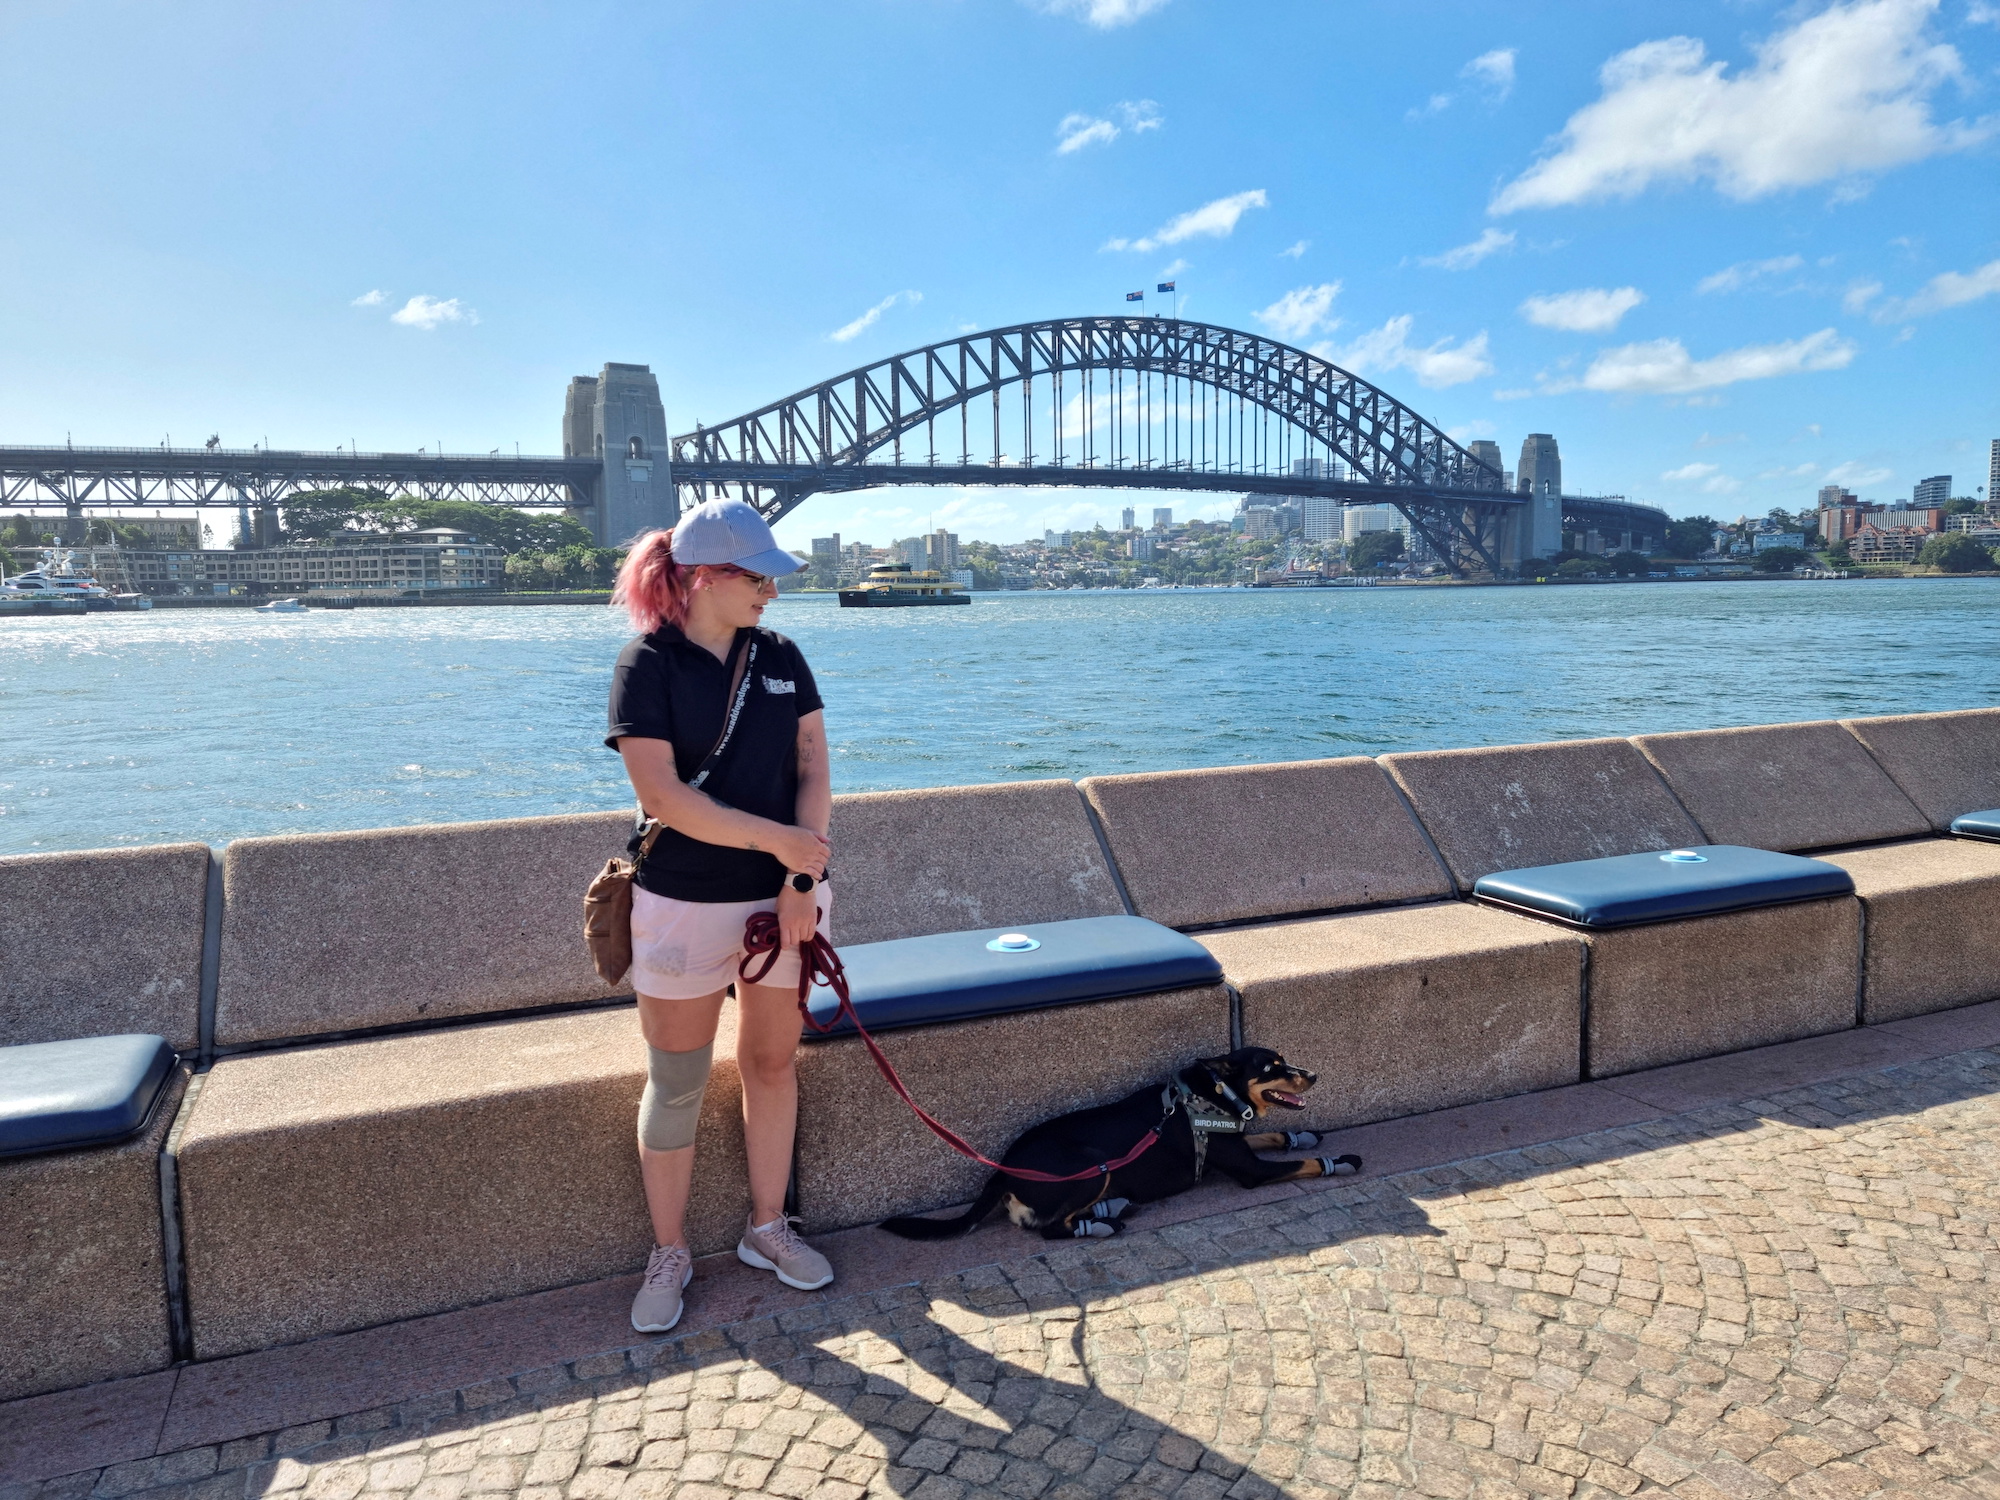 Australian kelpie dog Rasy and Mad Dogs and Englishmen dog handler Carla Shoobert take a break after patroling for seagulls at Sydney’s Opera Bar